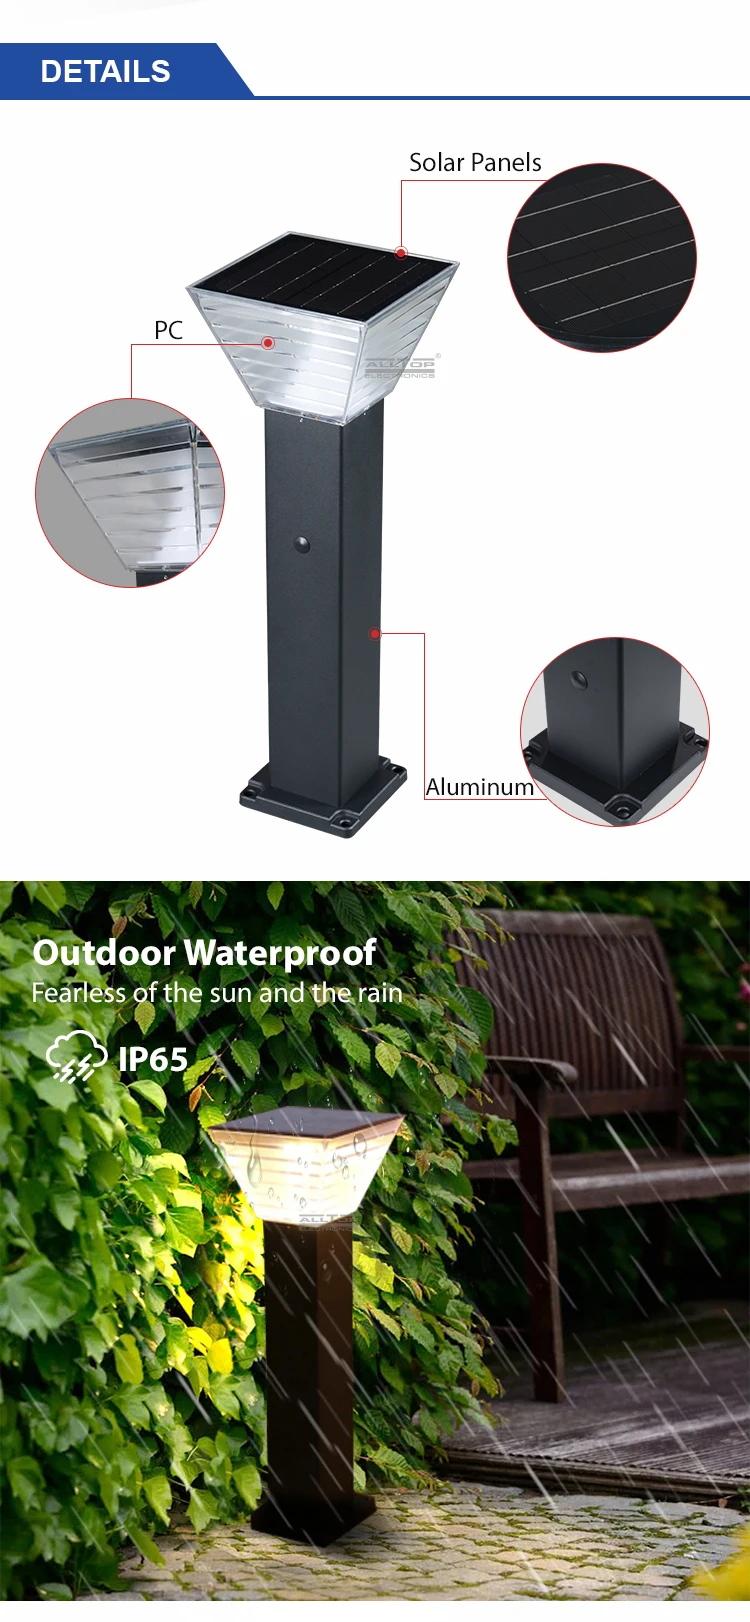 ALLTOP High guality energy saving solar charging ip65 outdoor 5w led street solar garden light